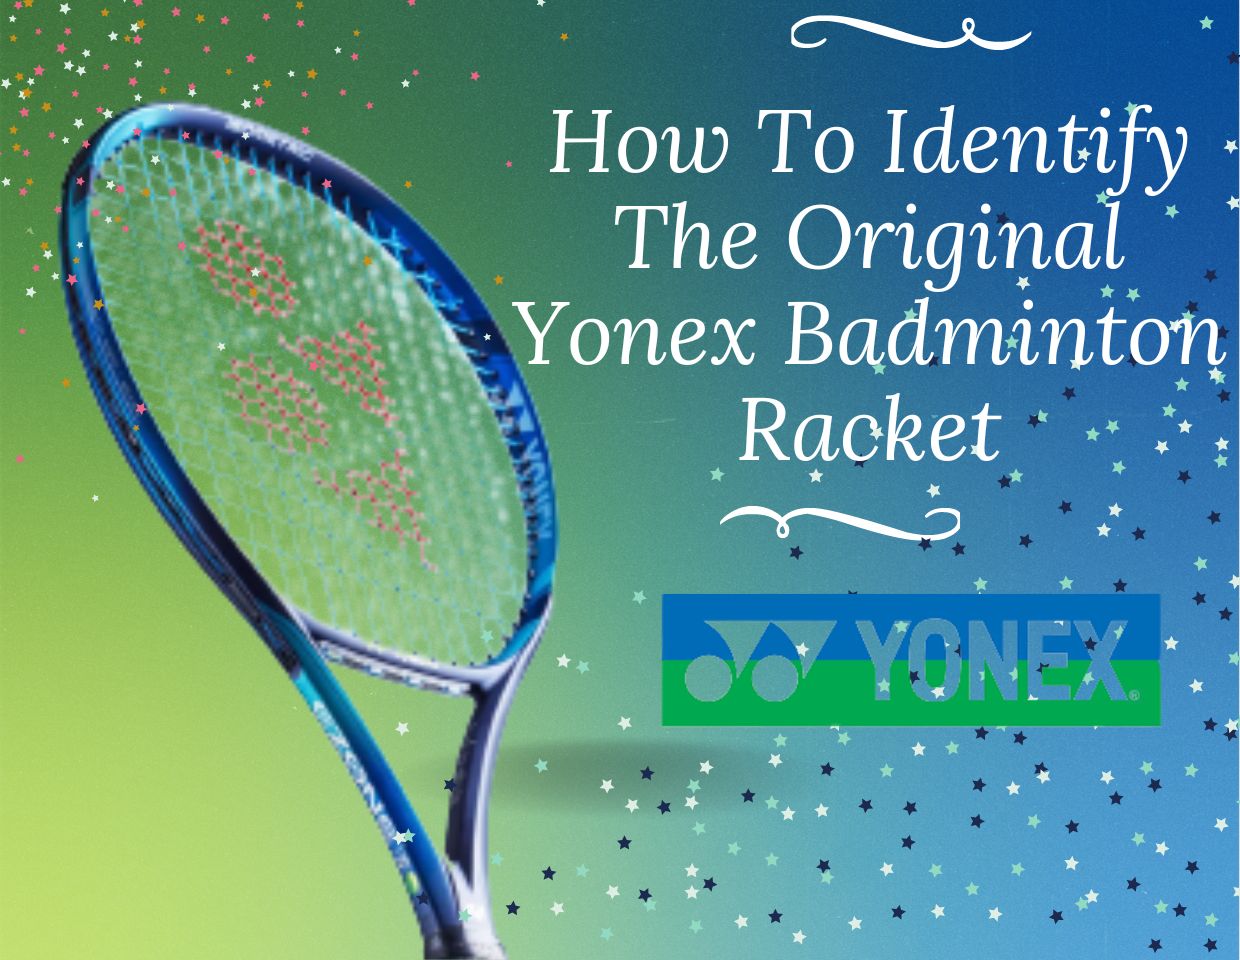 Identify the Original Yonex Badminton Racket